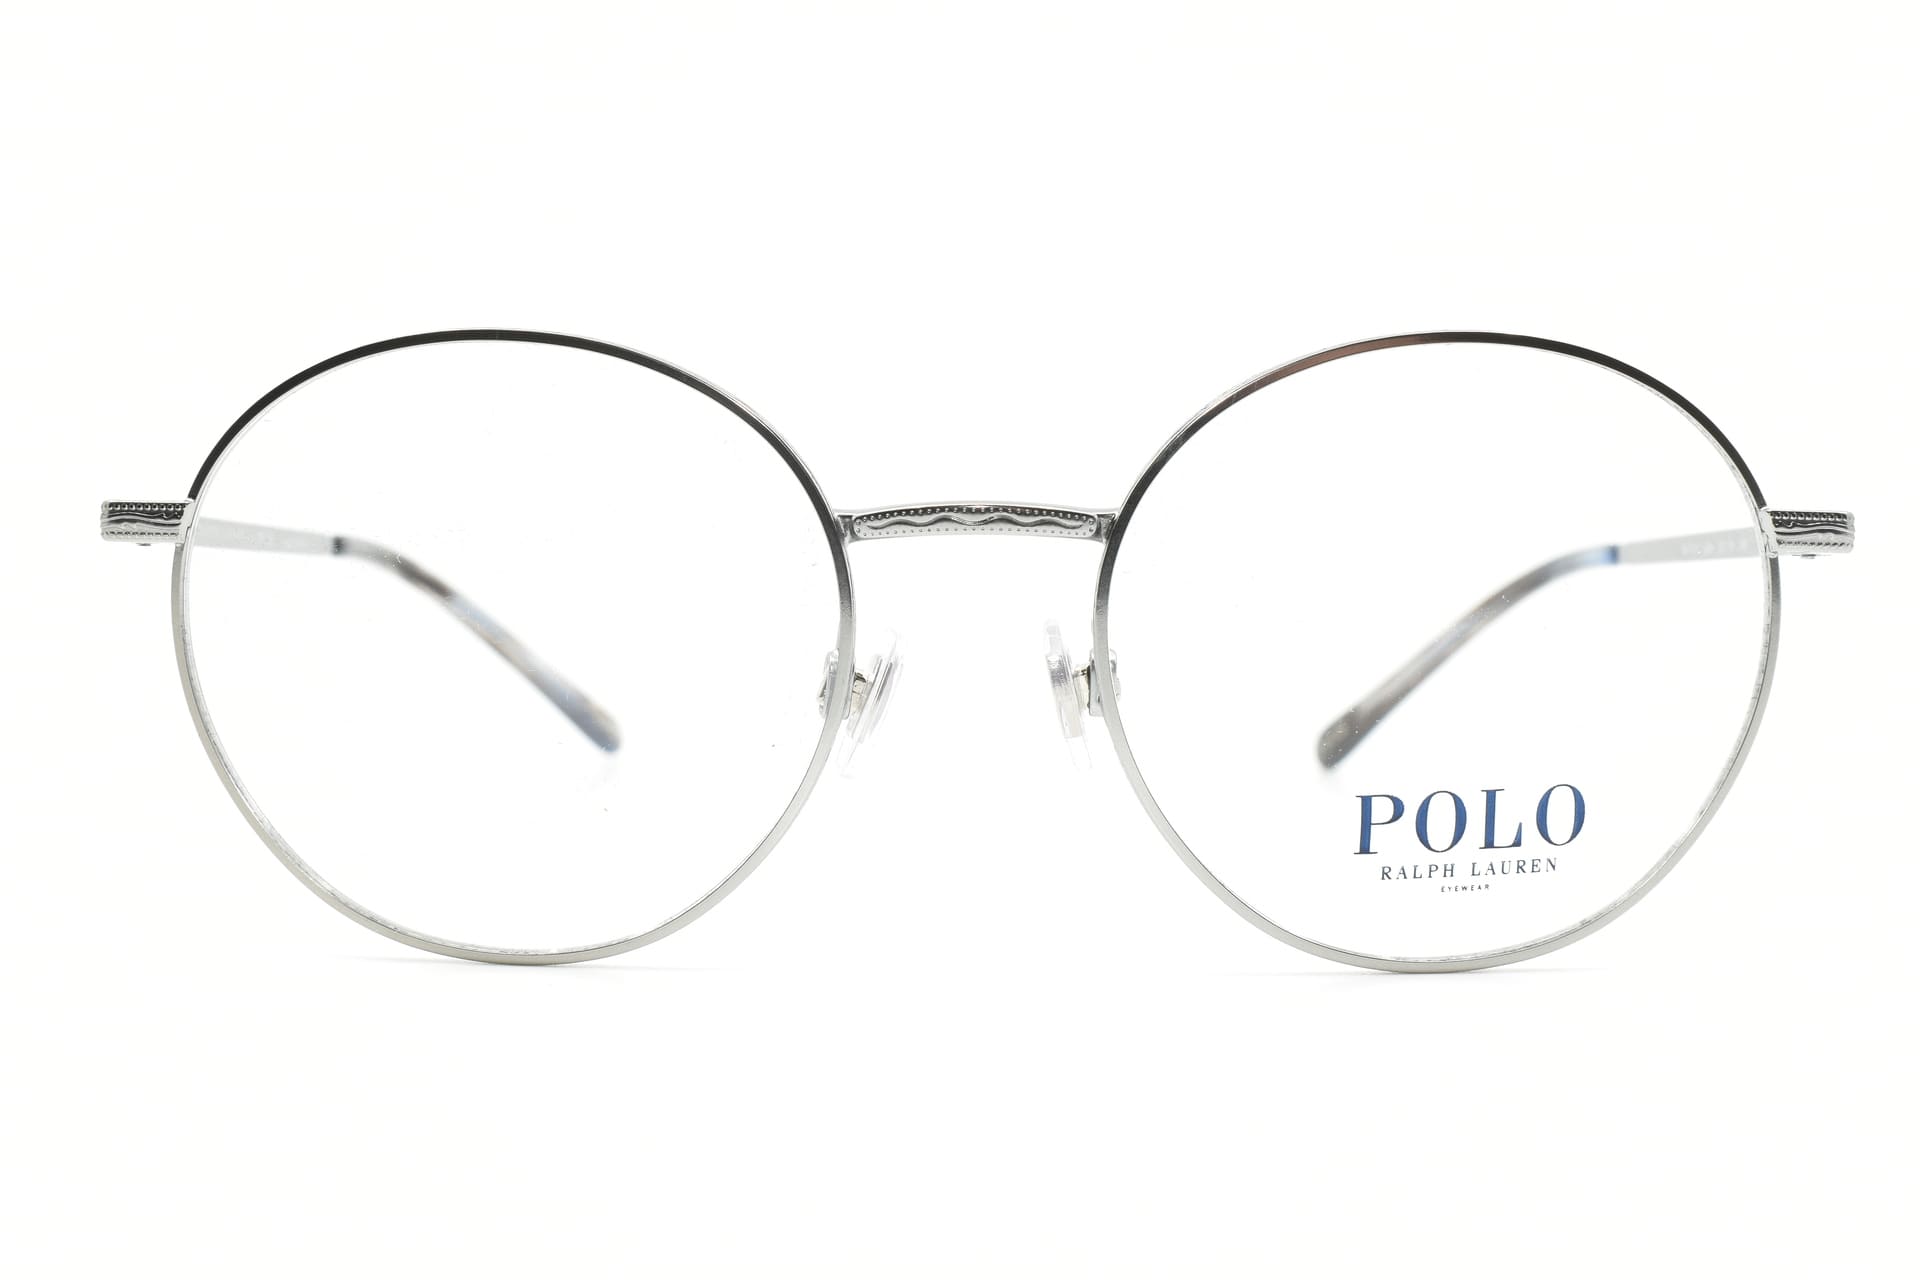 Polo ralph loren - 9266 / 52-19-145